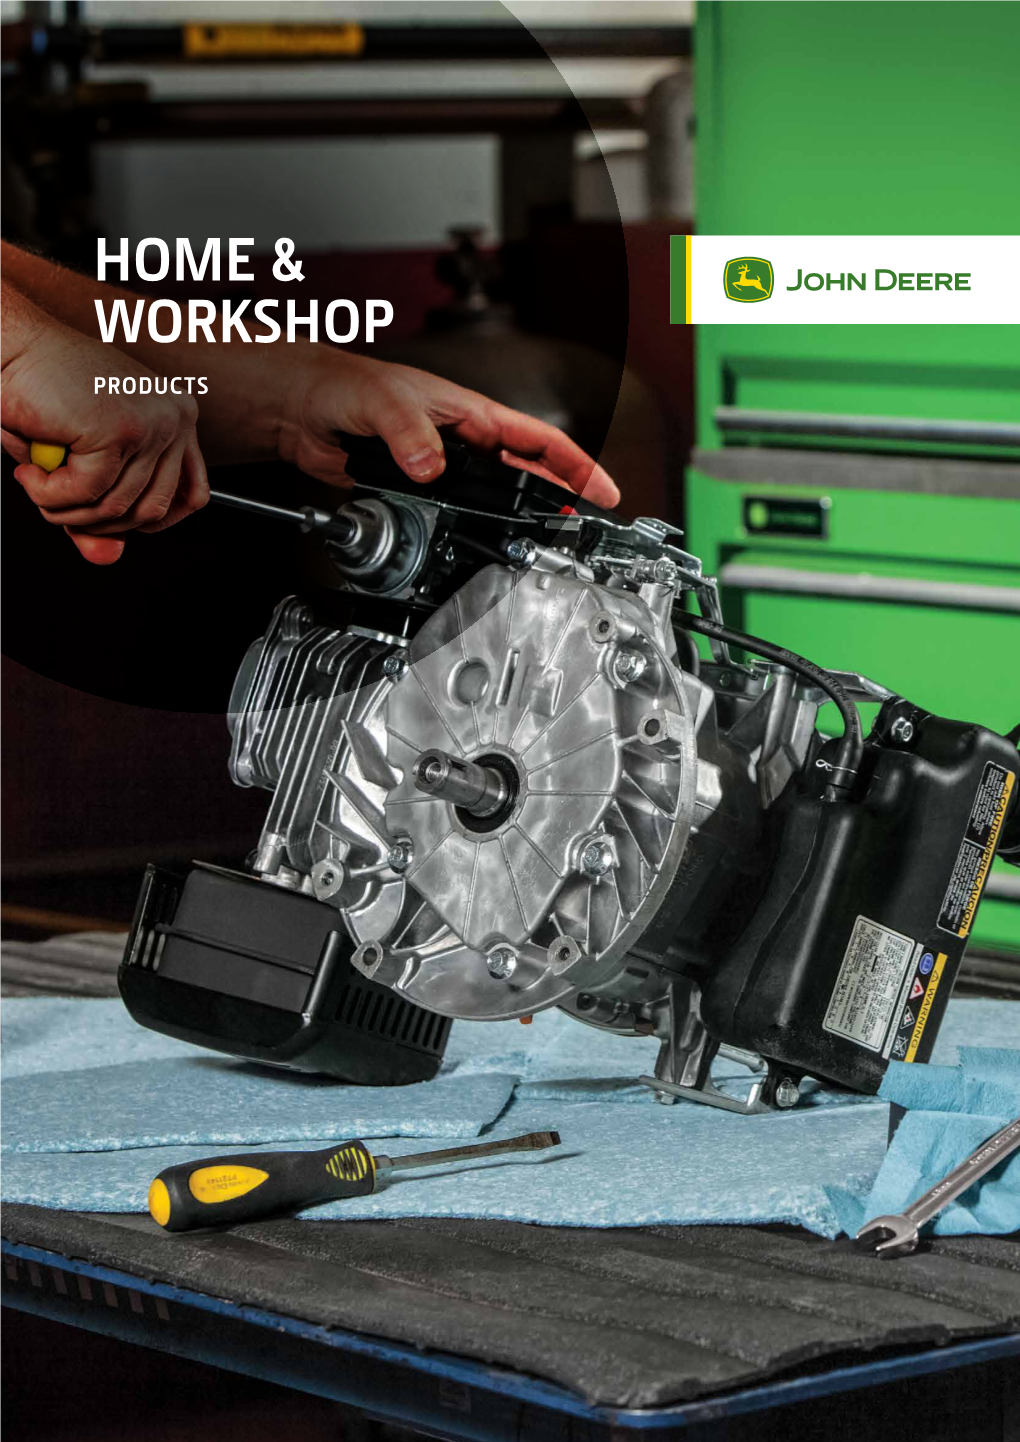 John Deere Home & Workshop Products